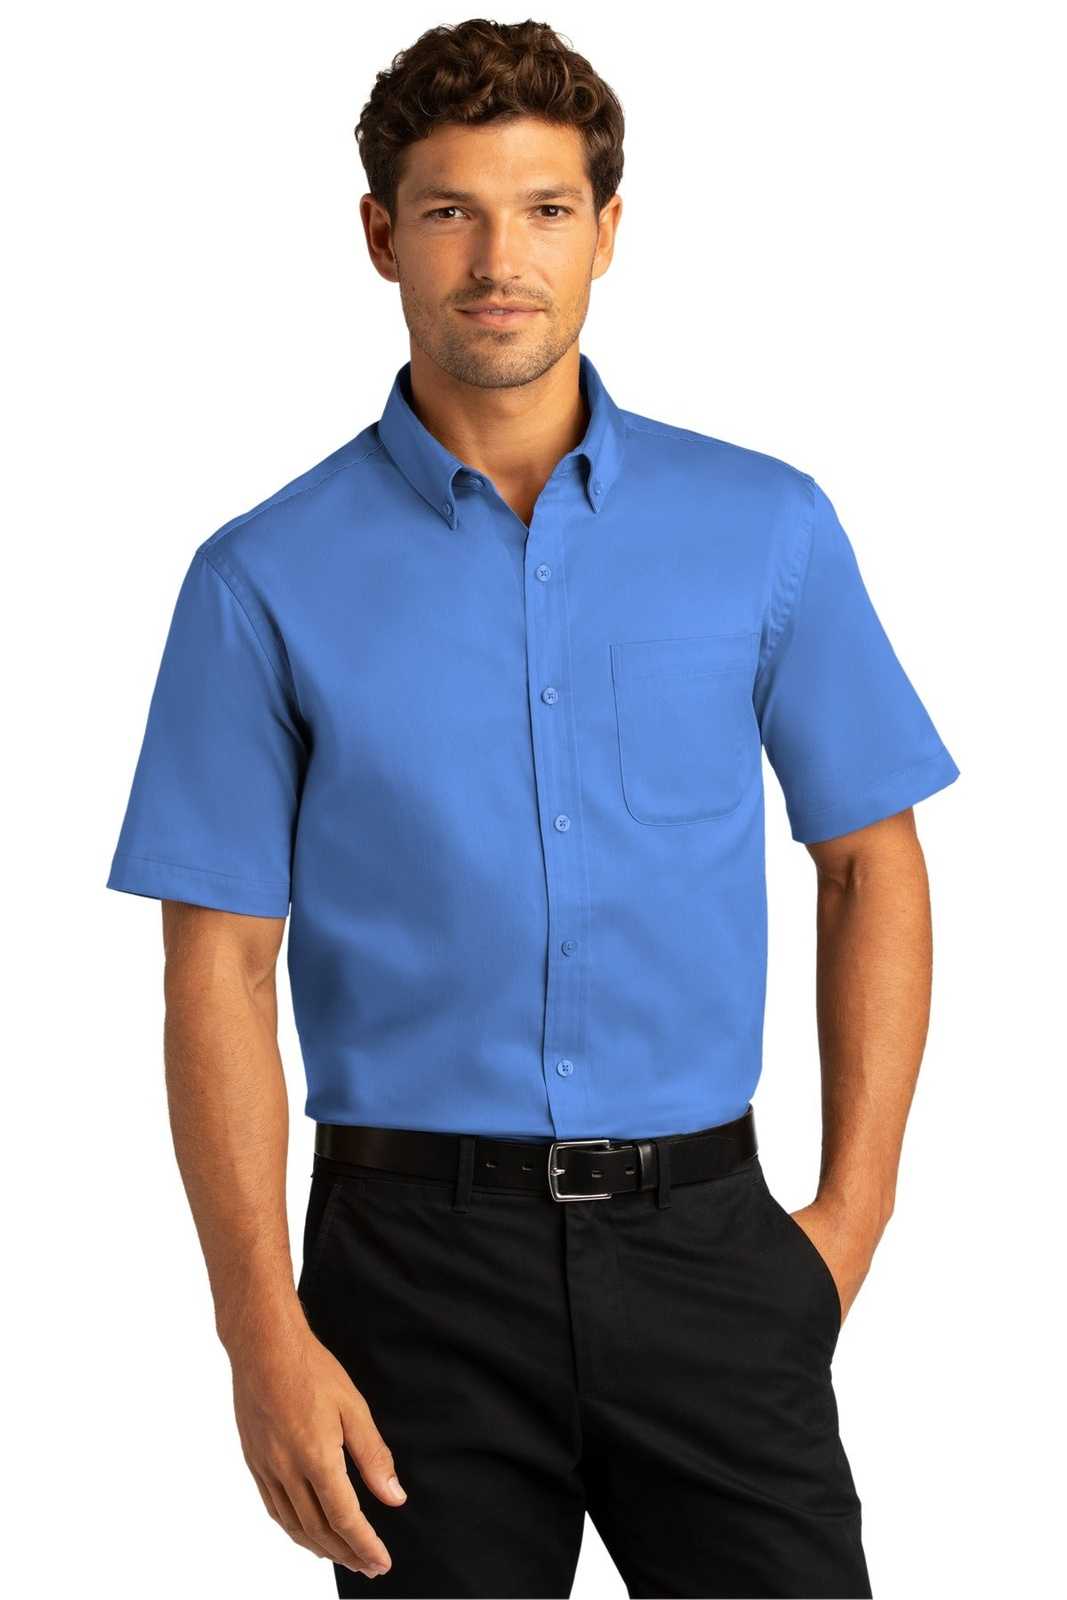 Port Authority W809 Short Sleeve SuperPro React Twill Shirt - Ultramarine Blue - HIT a Double - 1